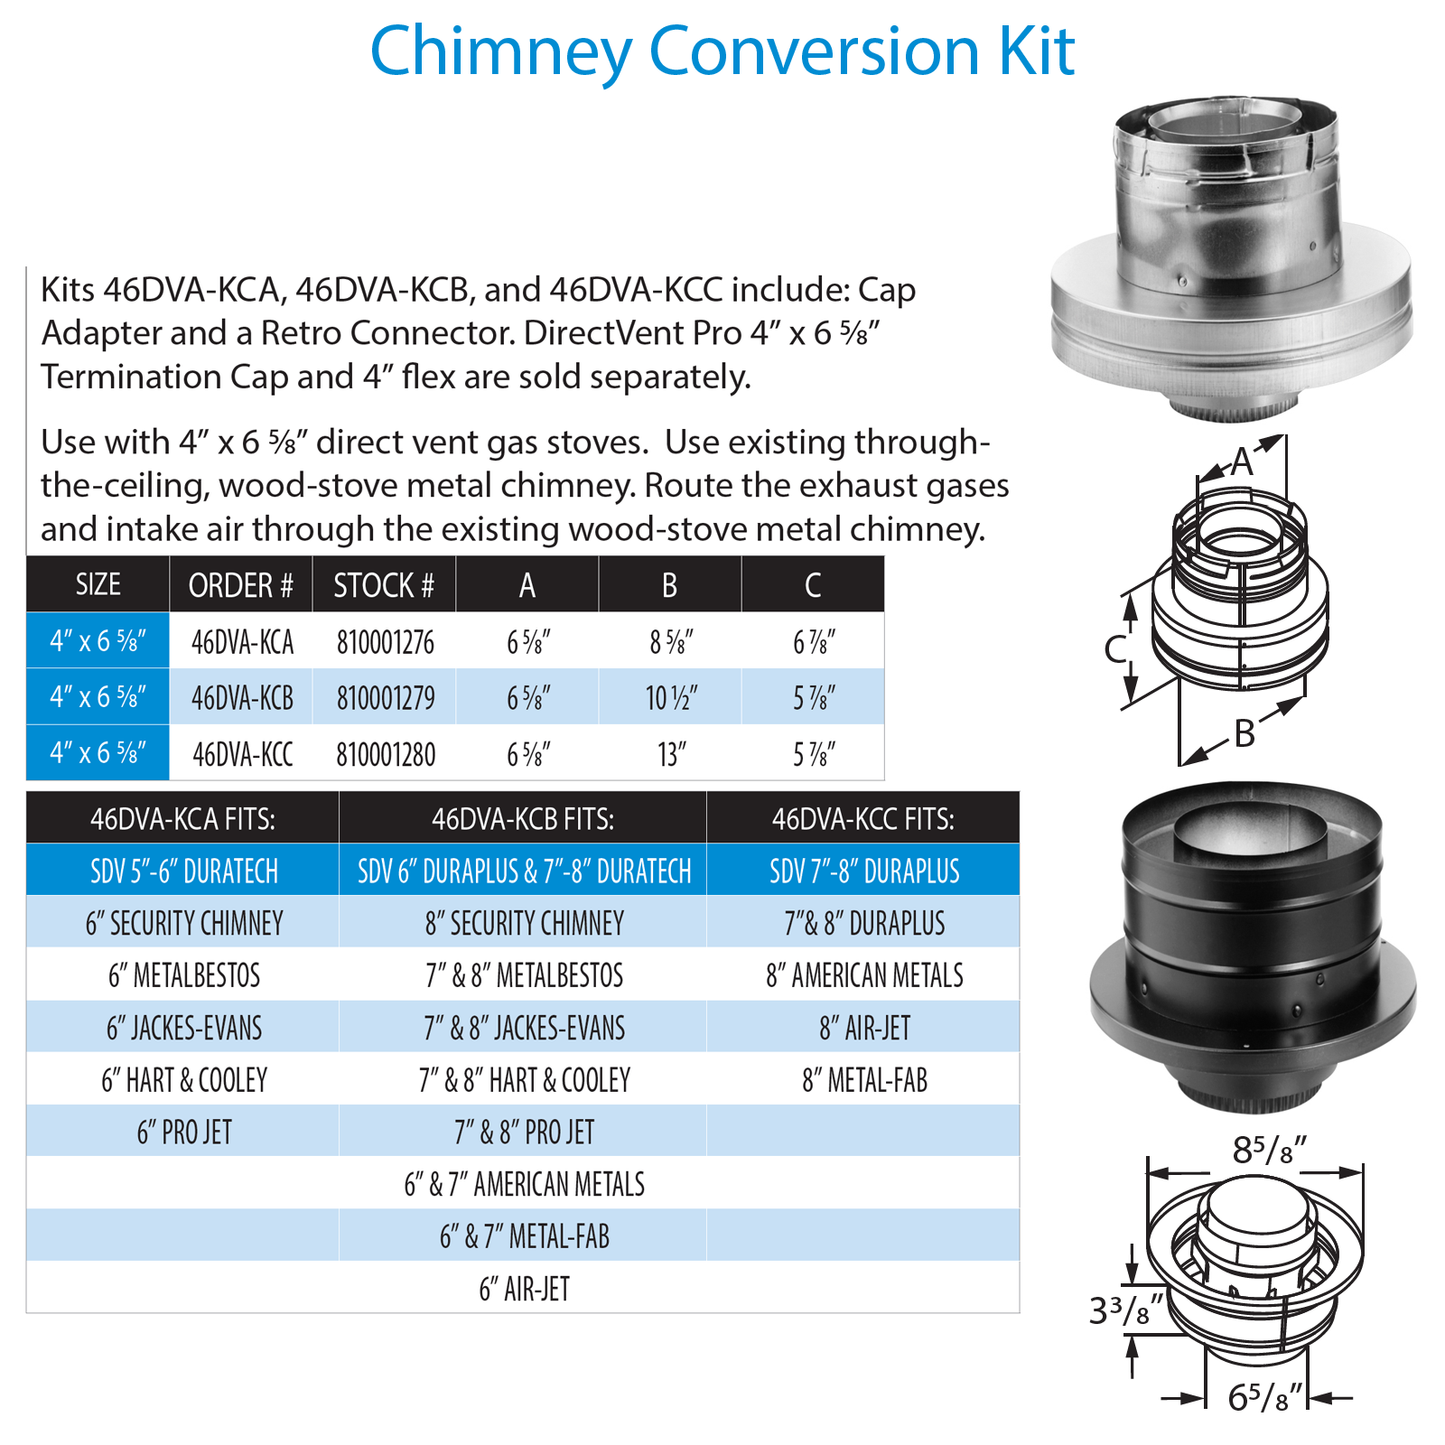 DuraVent DirectVent Pro Chimney Conversion Kit | 46DVA-KCC